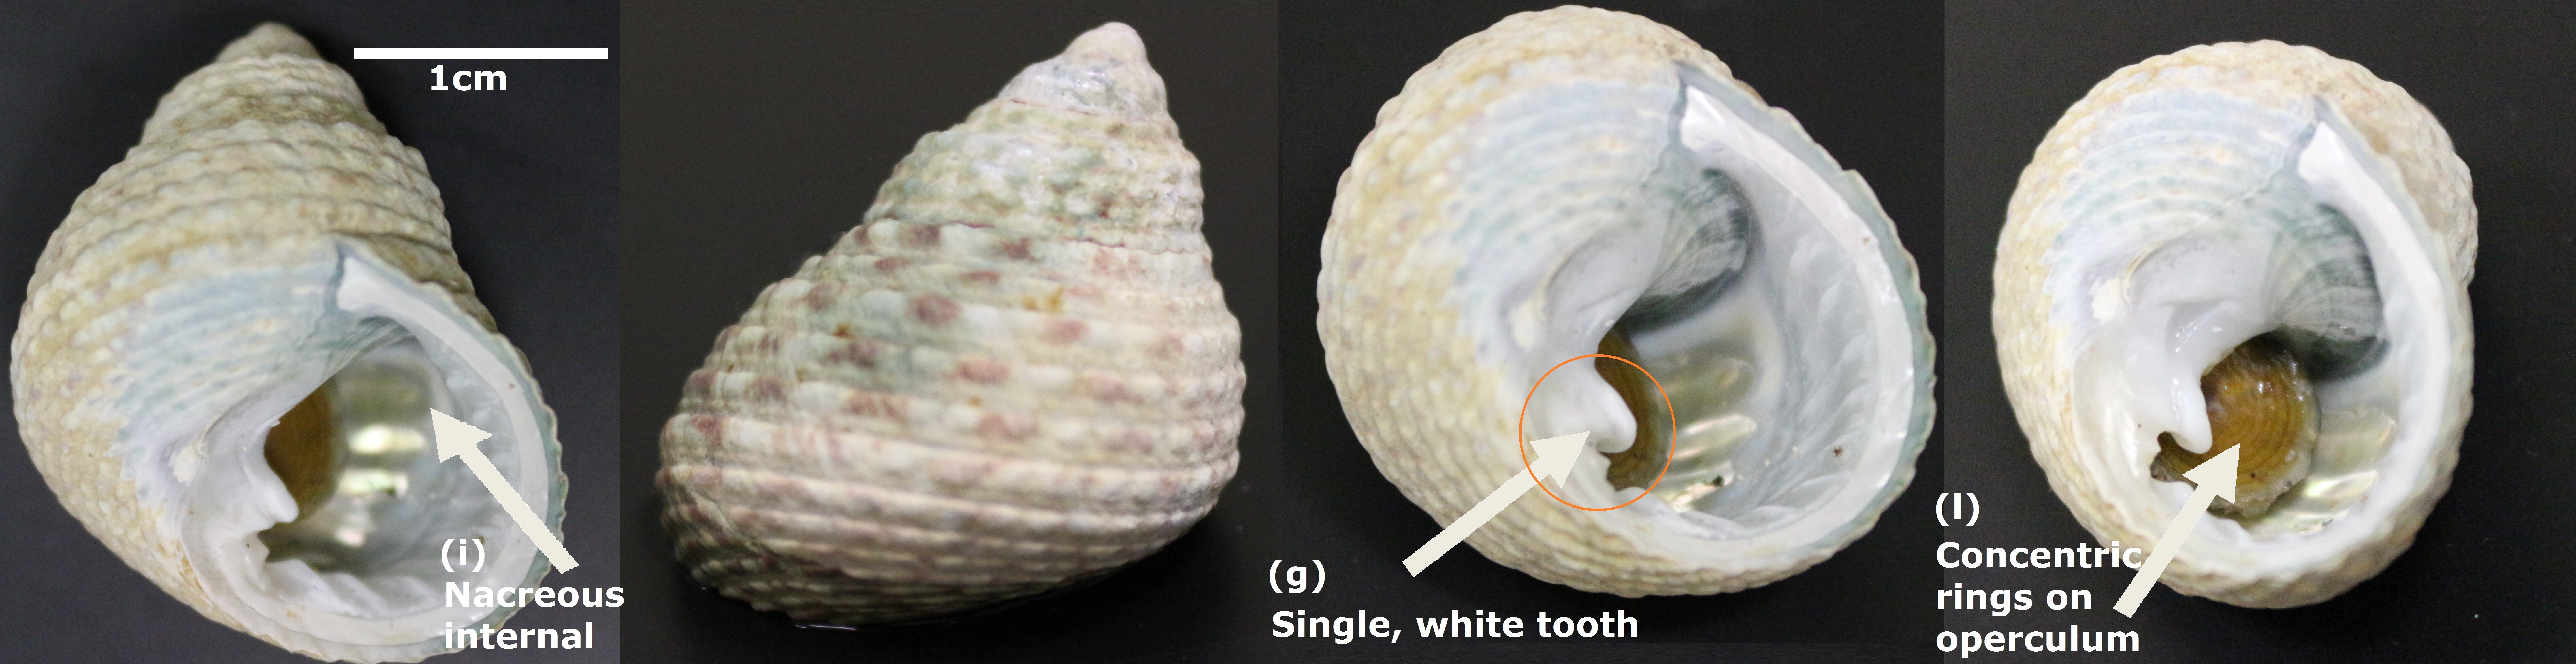 Monodontalabio shells with labels.jpg